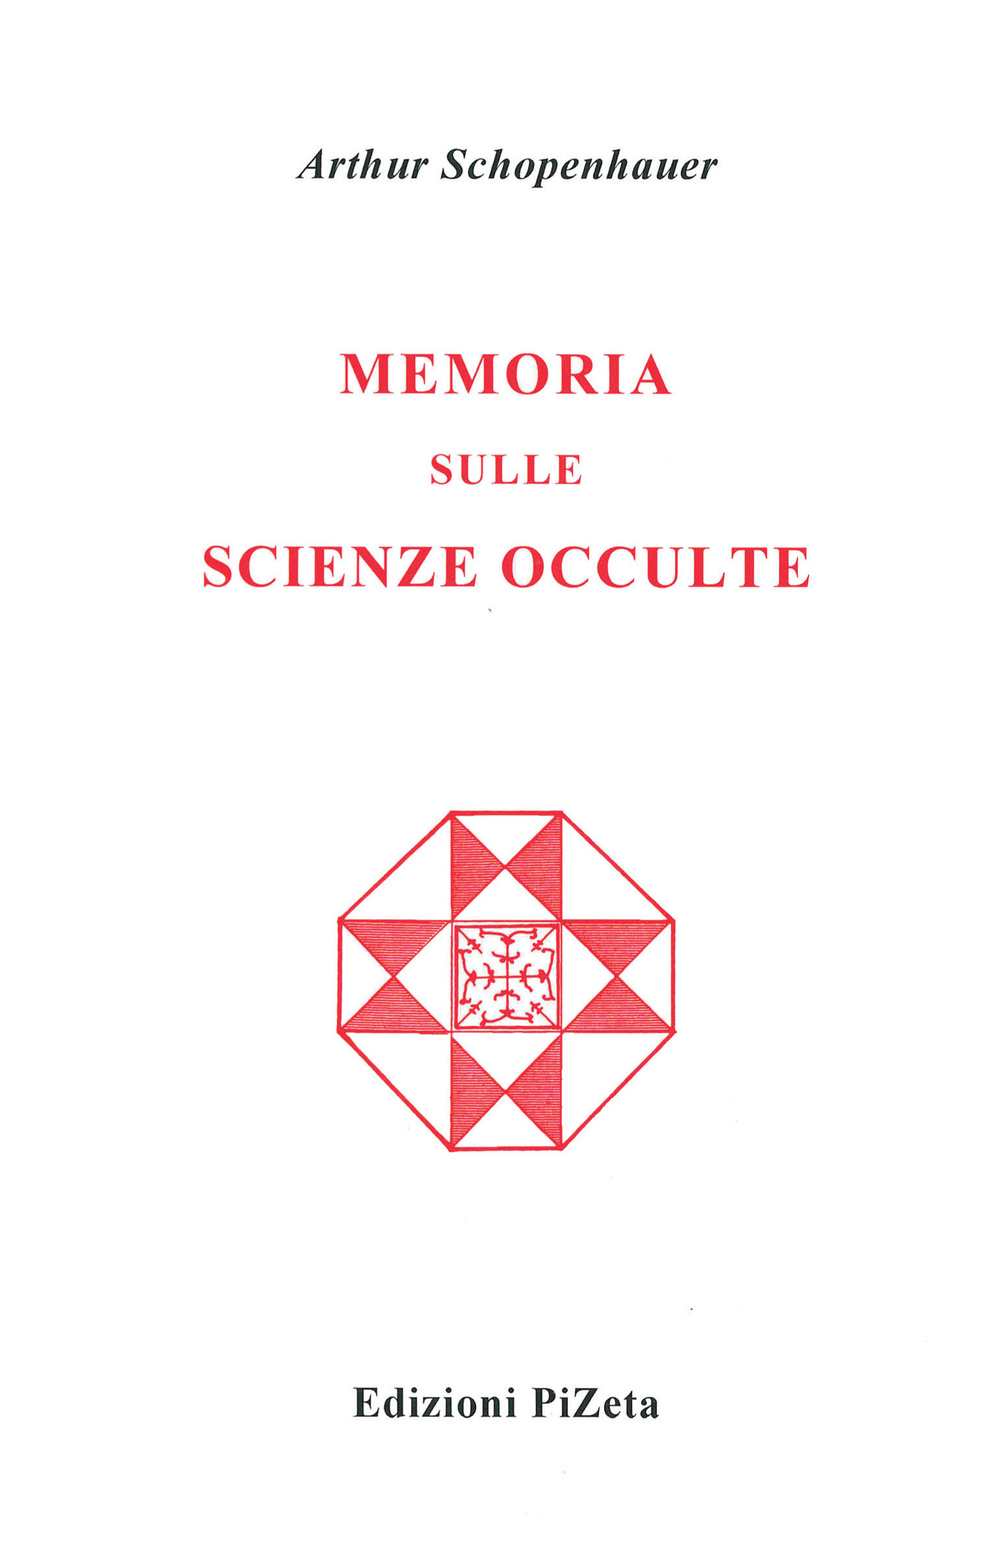 Image of Memoria sulle scienze occulte